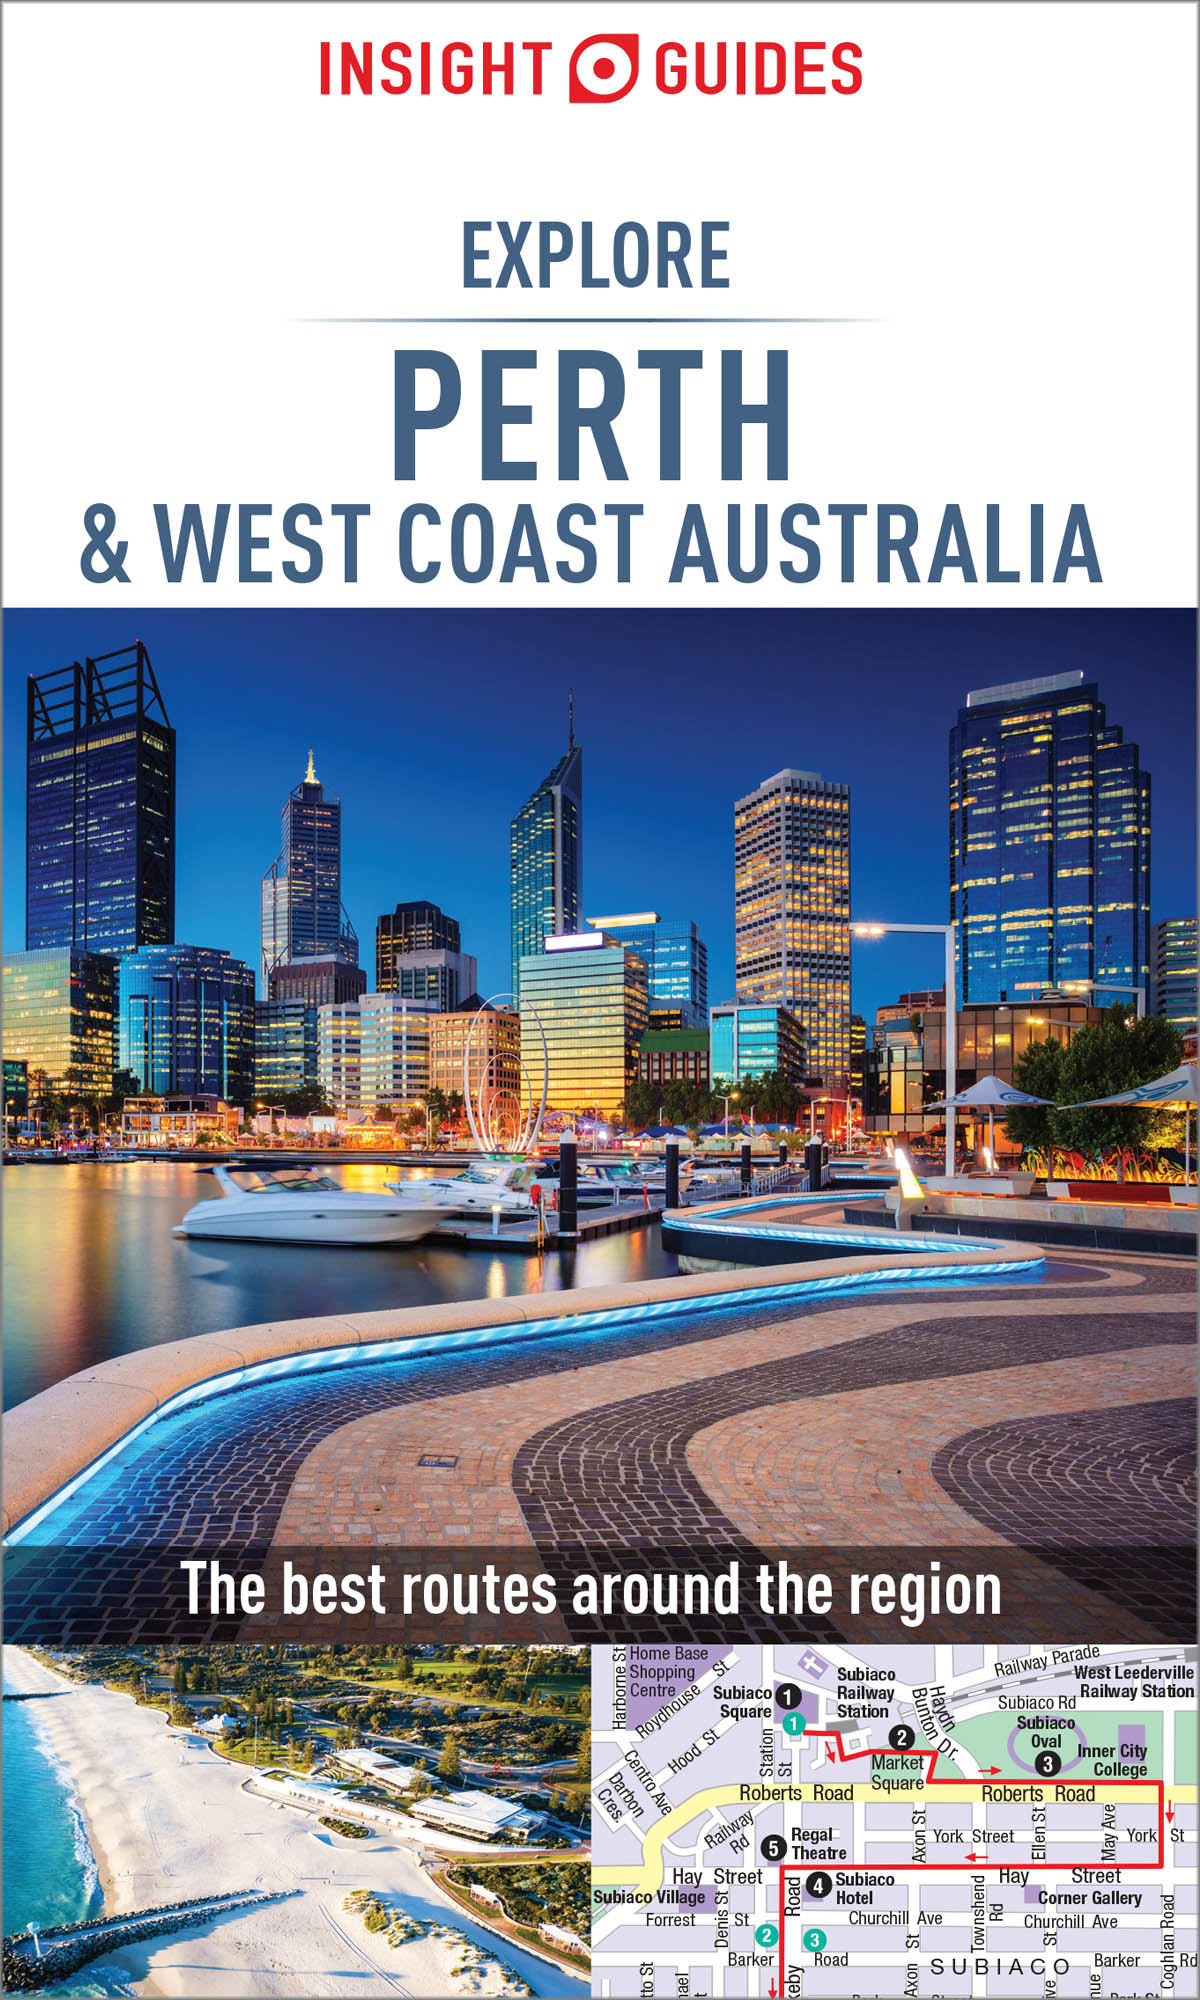 west coast australia travel guide